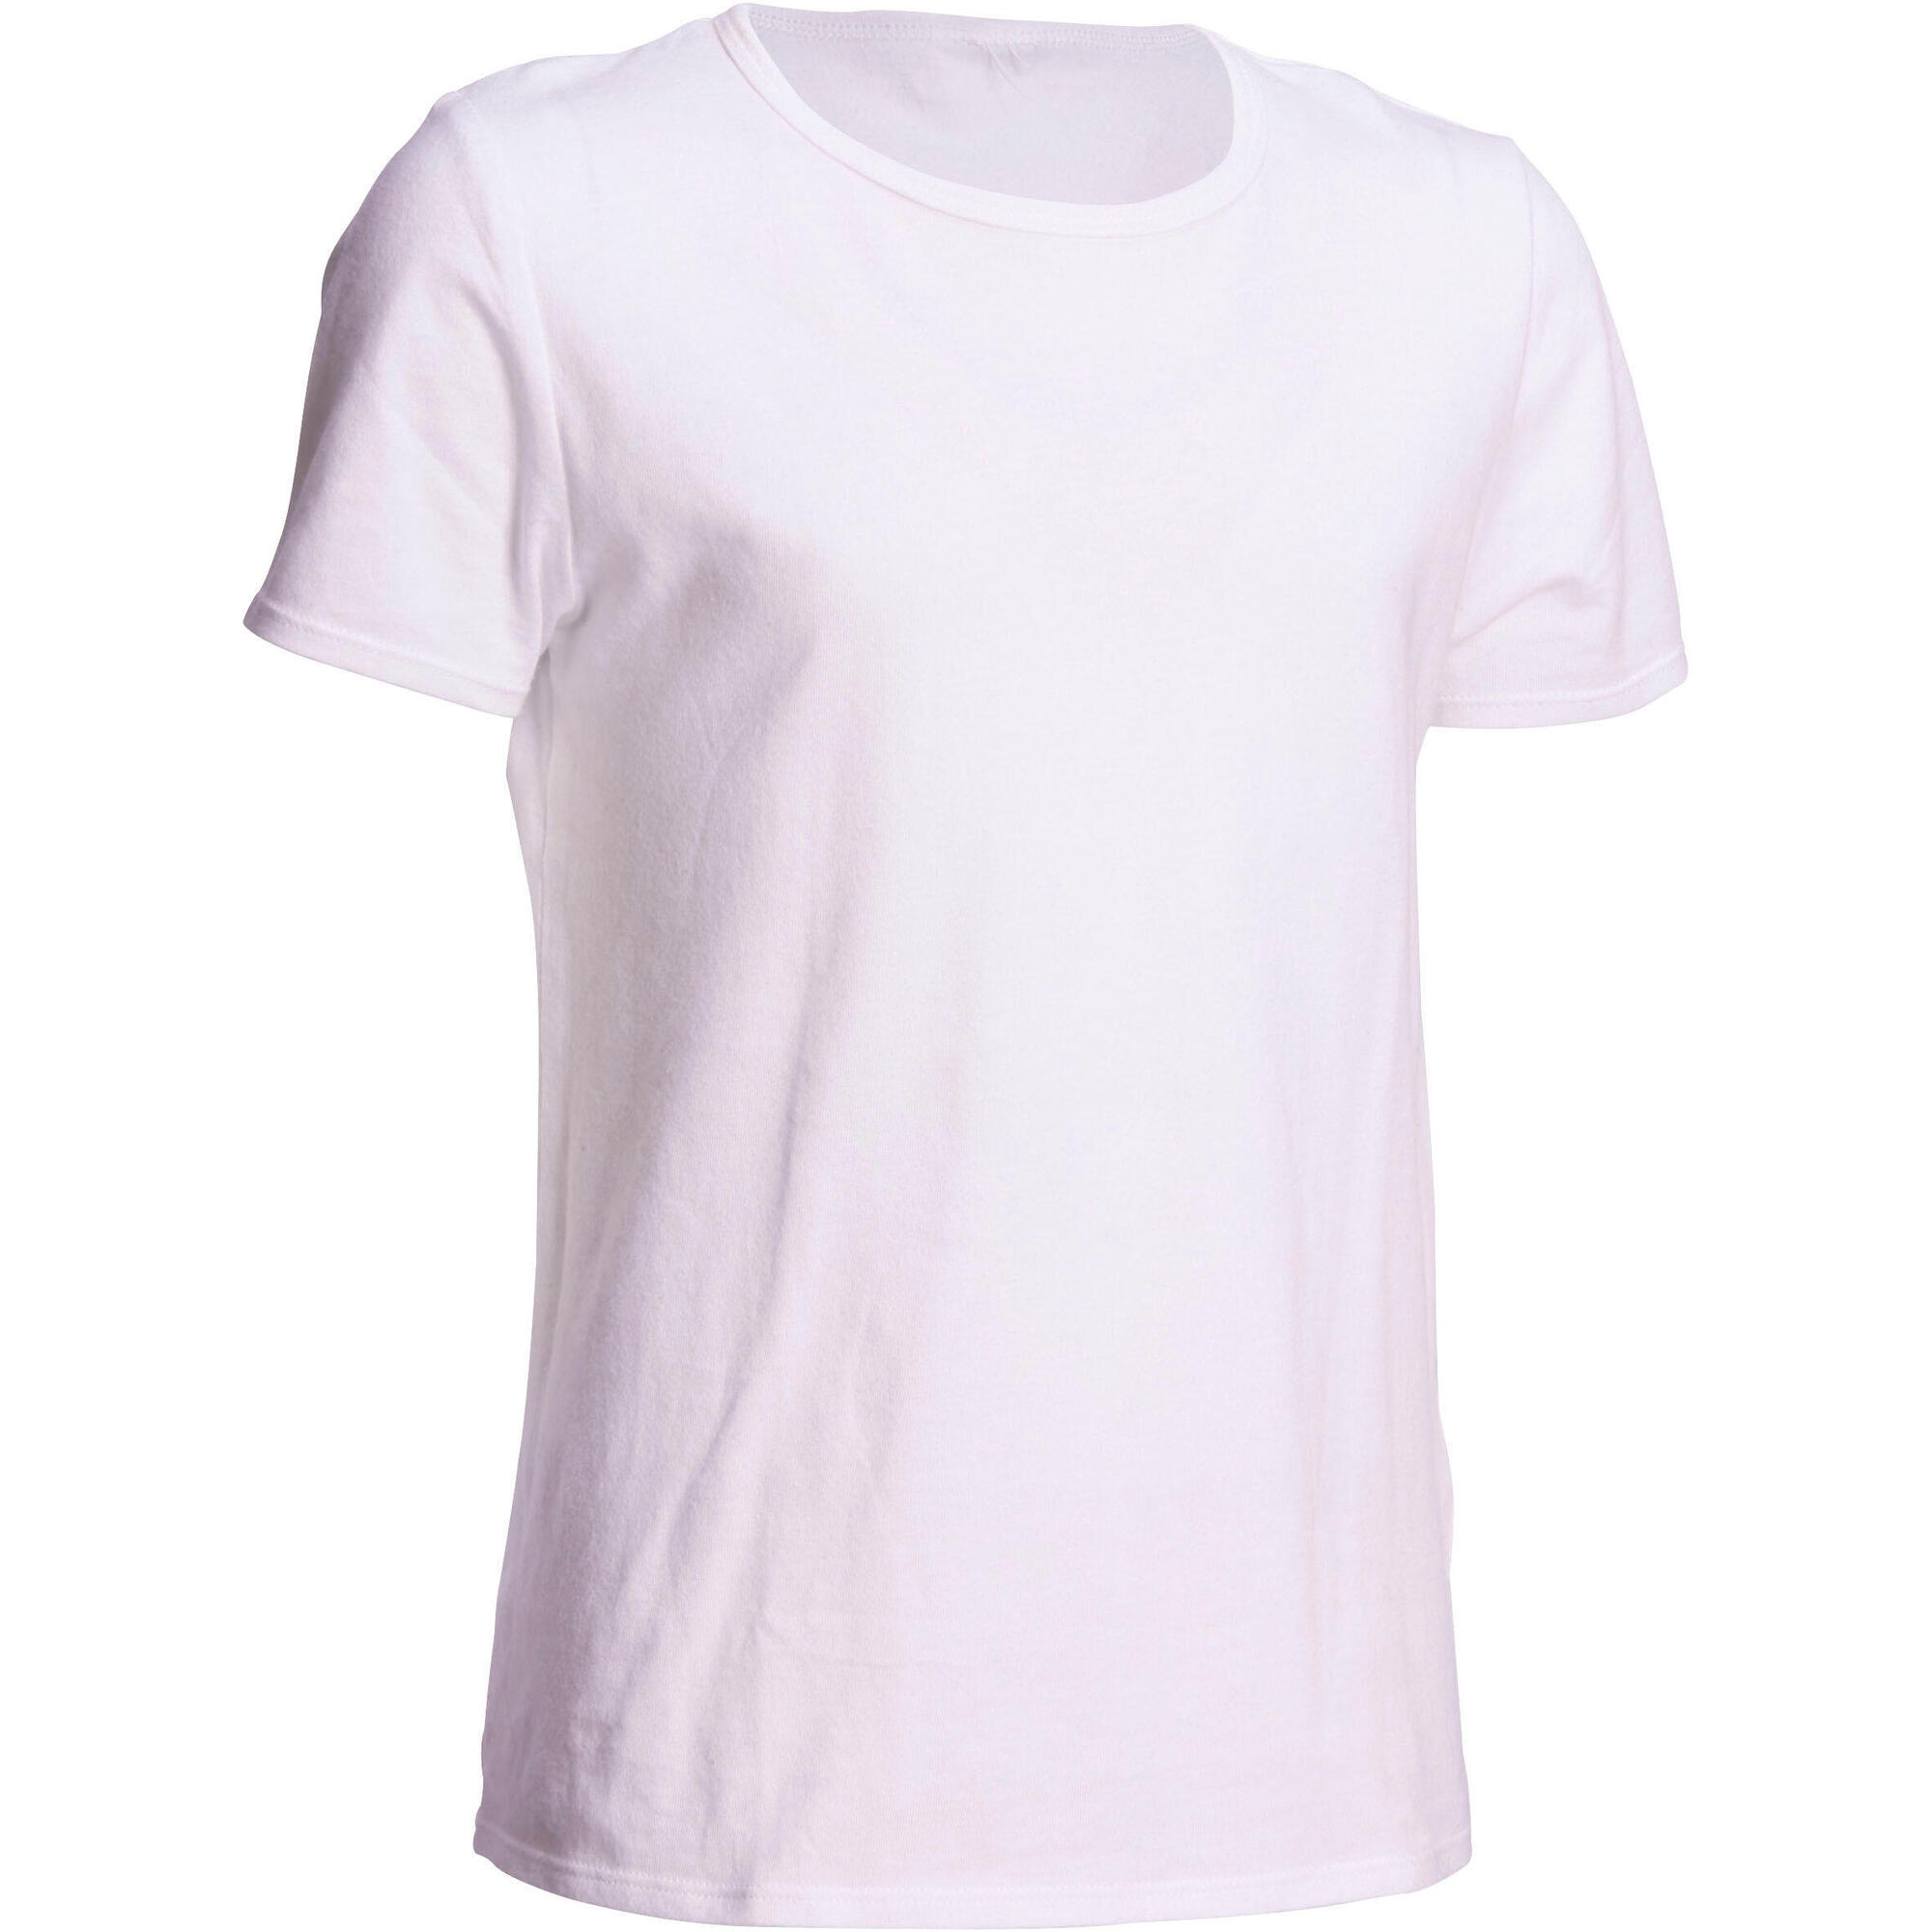 decathlon plain white t shirt